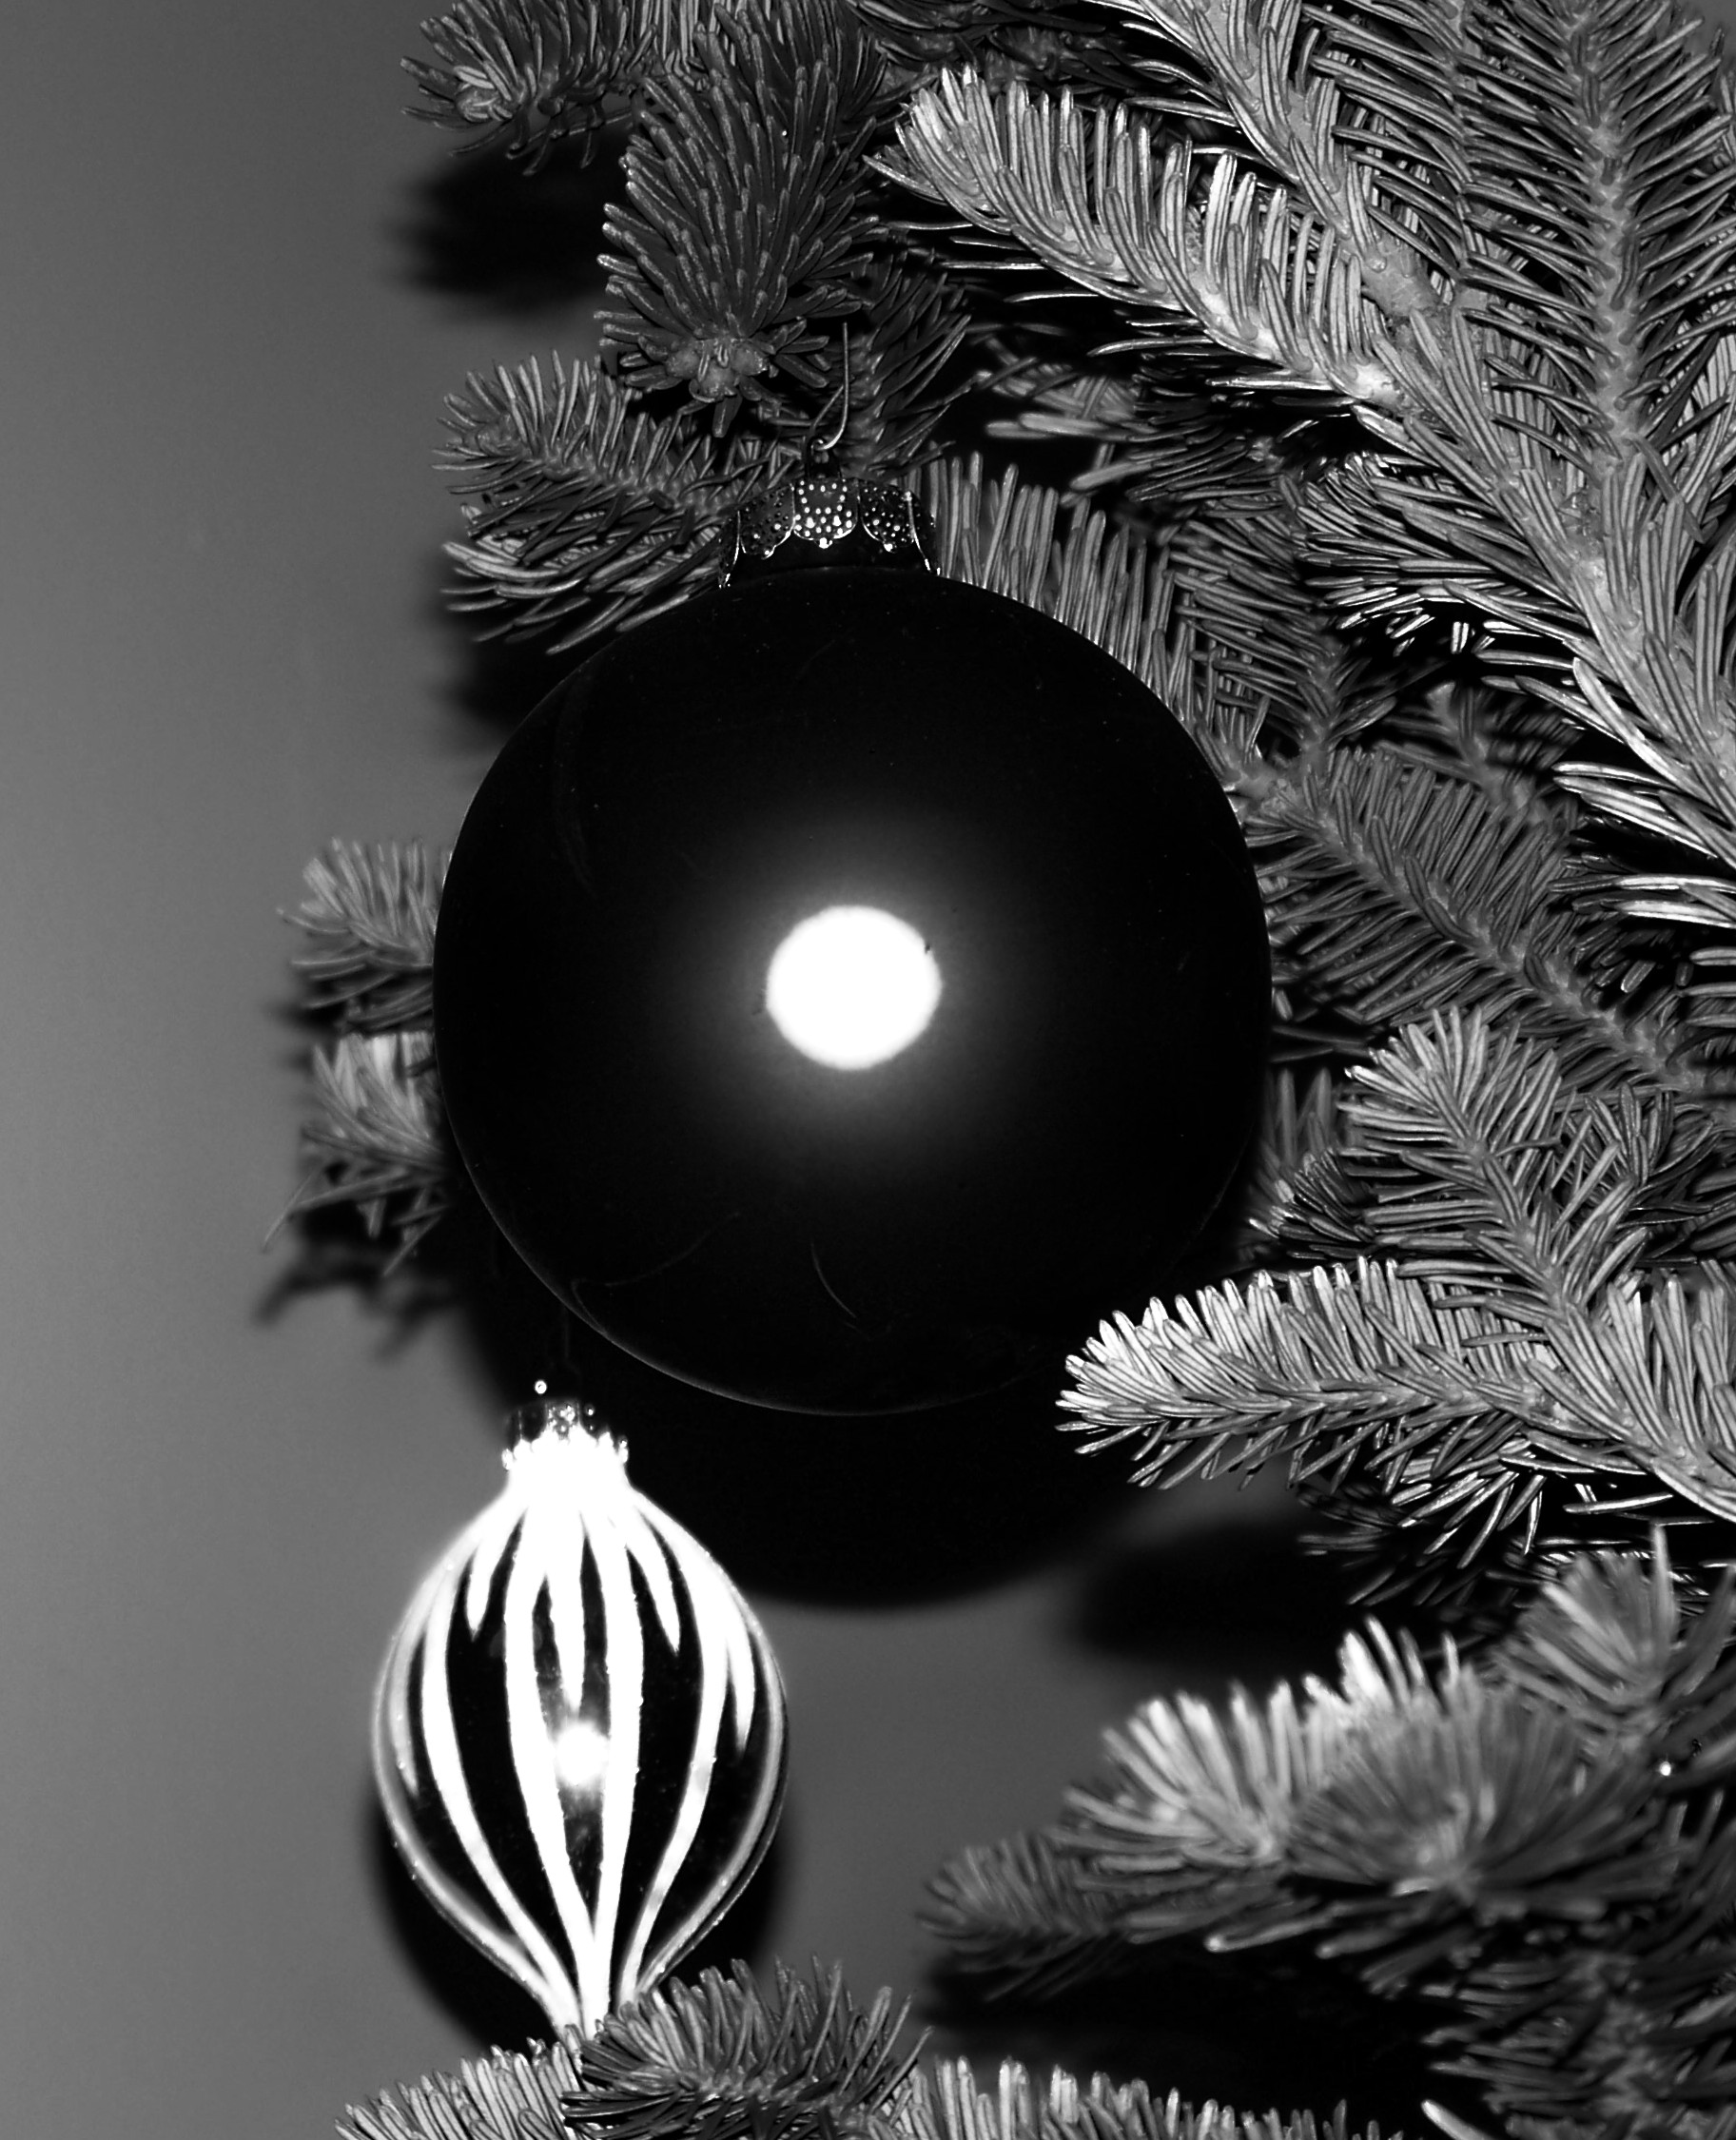 ornament.jpg